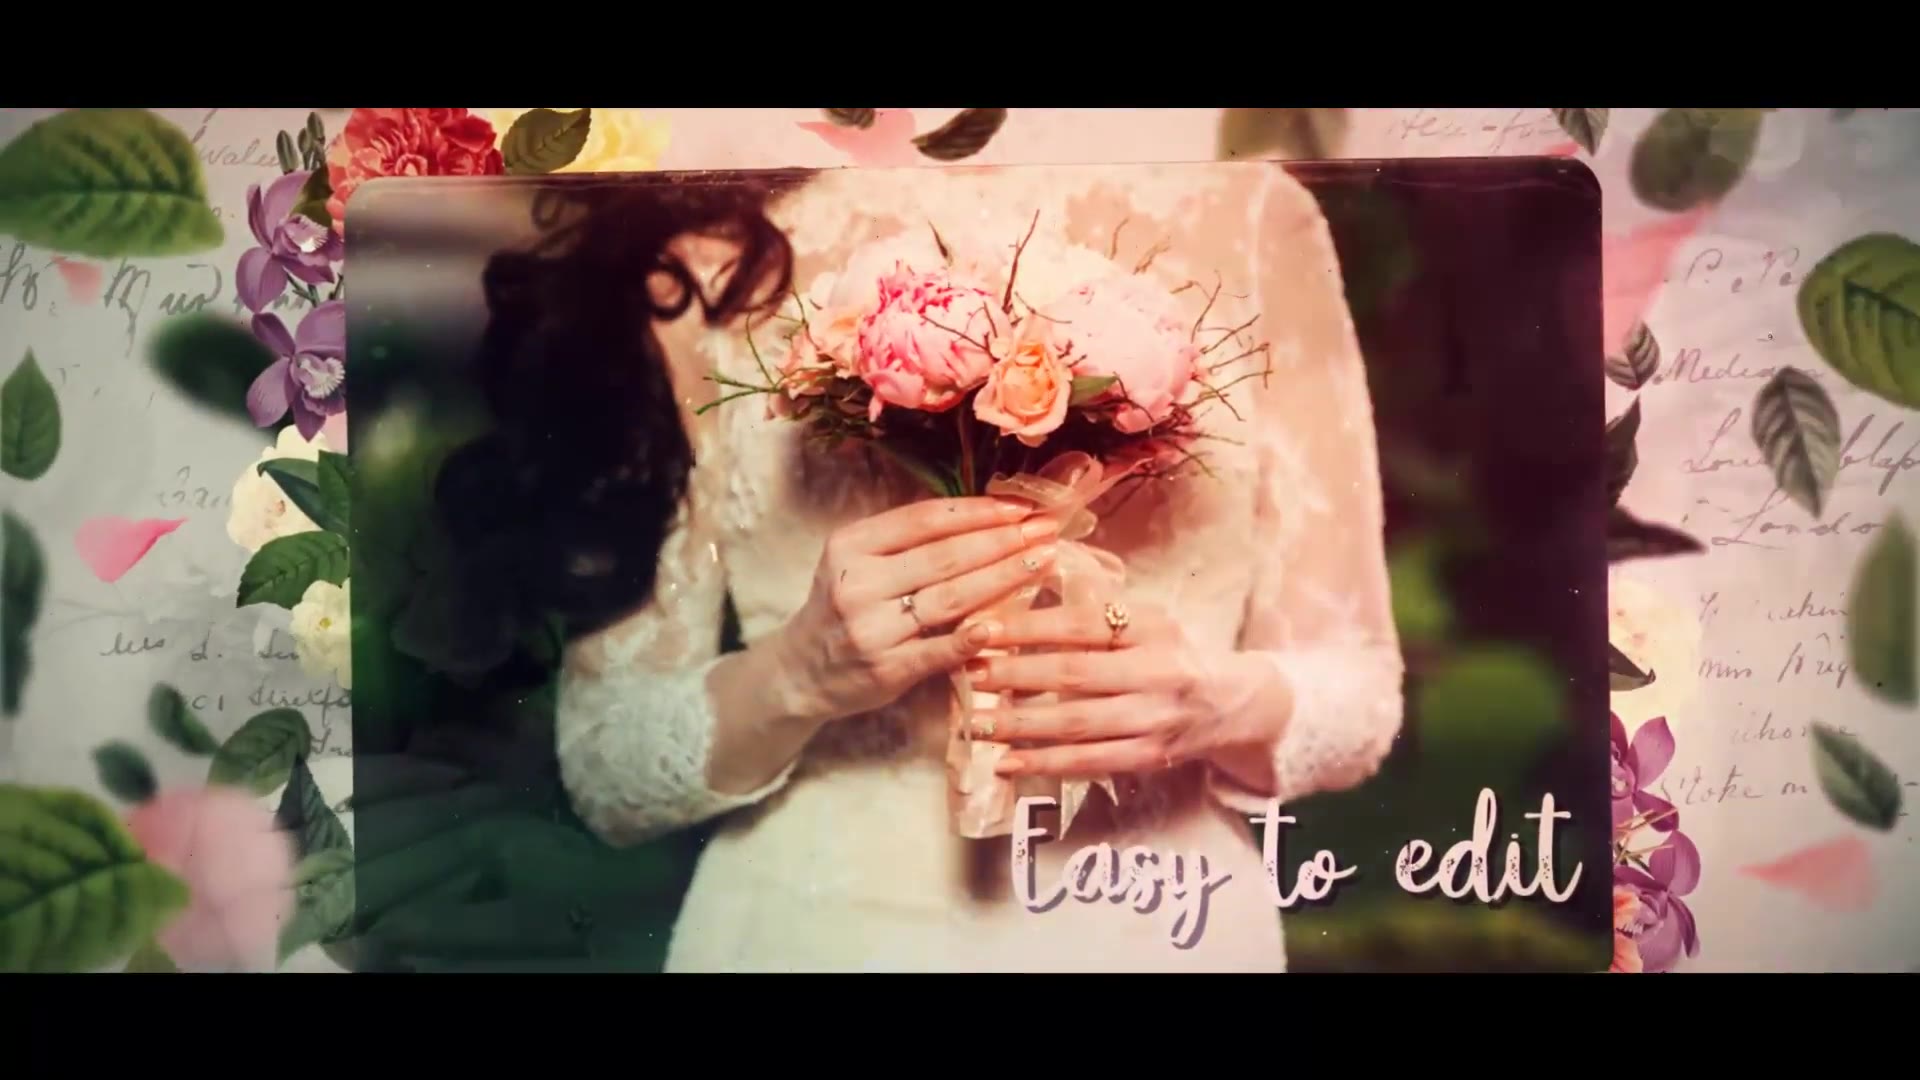 Wedding Slideshow v2 Videohive 23989006 After Effects Image 4